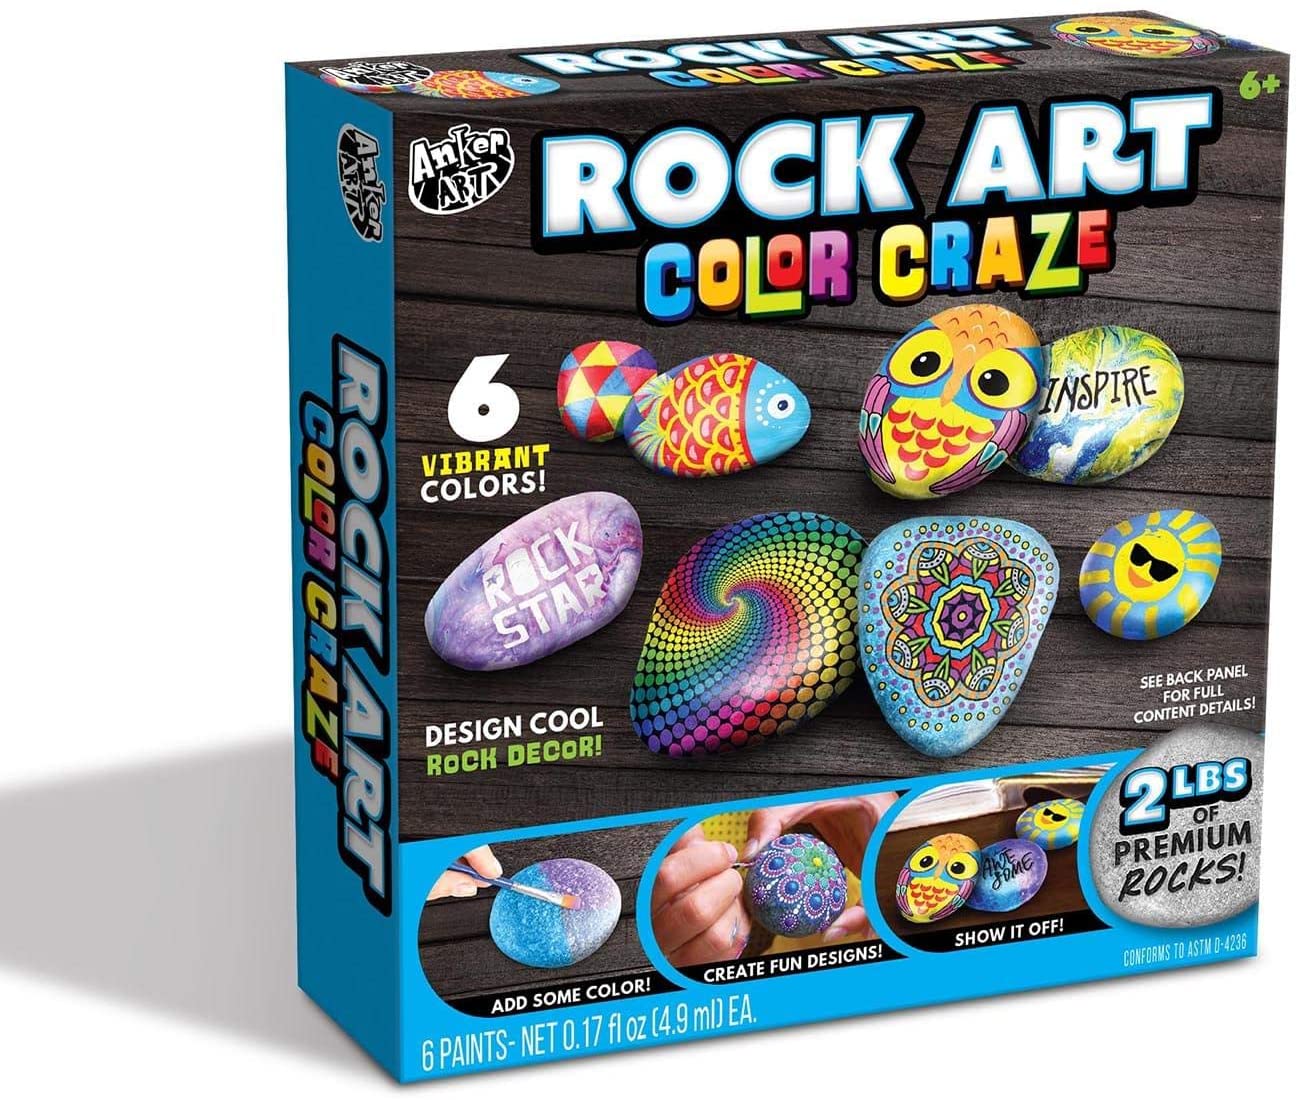 Anker Play Rock Art Color Craze DIY Craft Kit - Includes 2 lbs. of Premium Rock